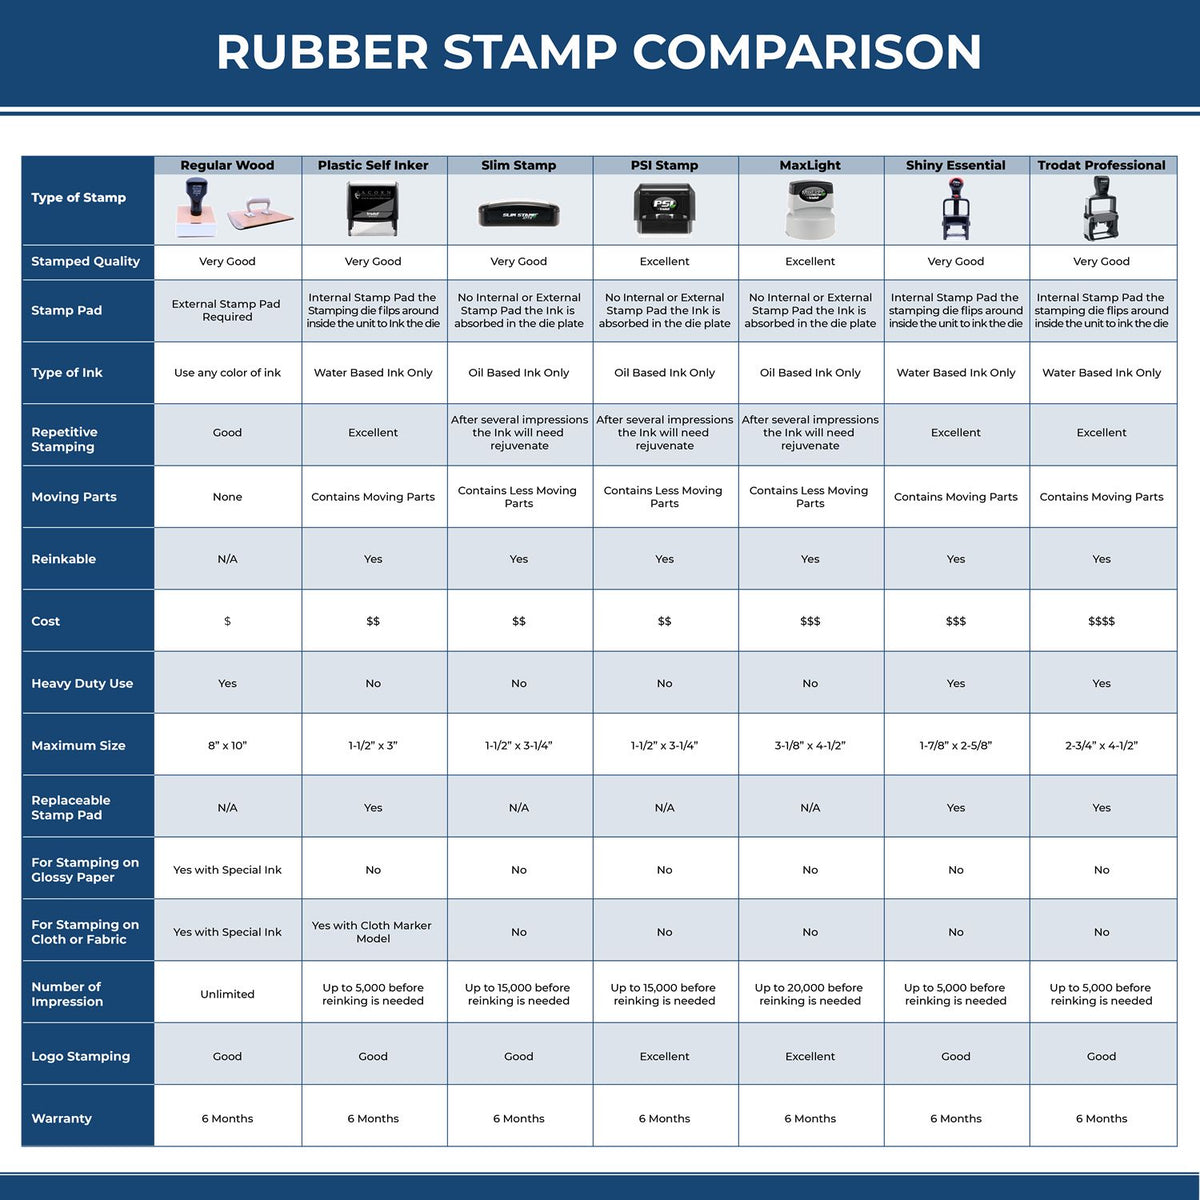 Large Incomplete Homework Rubber Stamp 4681R Rubber Stamp Comparison